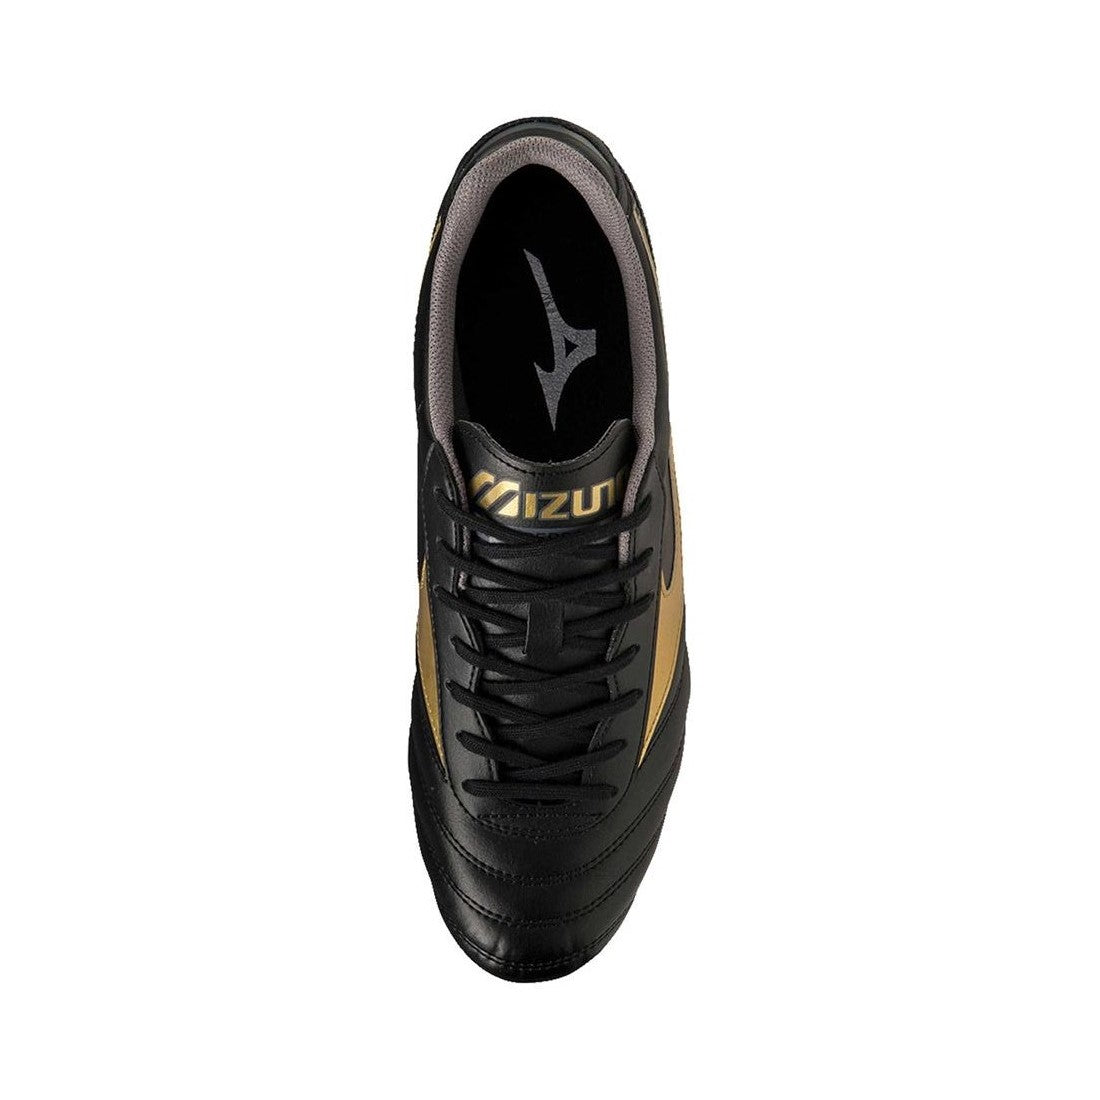 Mizuno Morelia II Club men&#39;s football boot P1GA231650 black gold